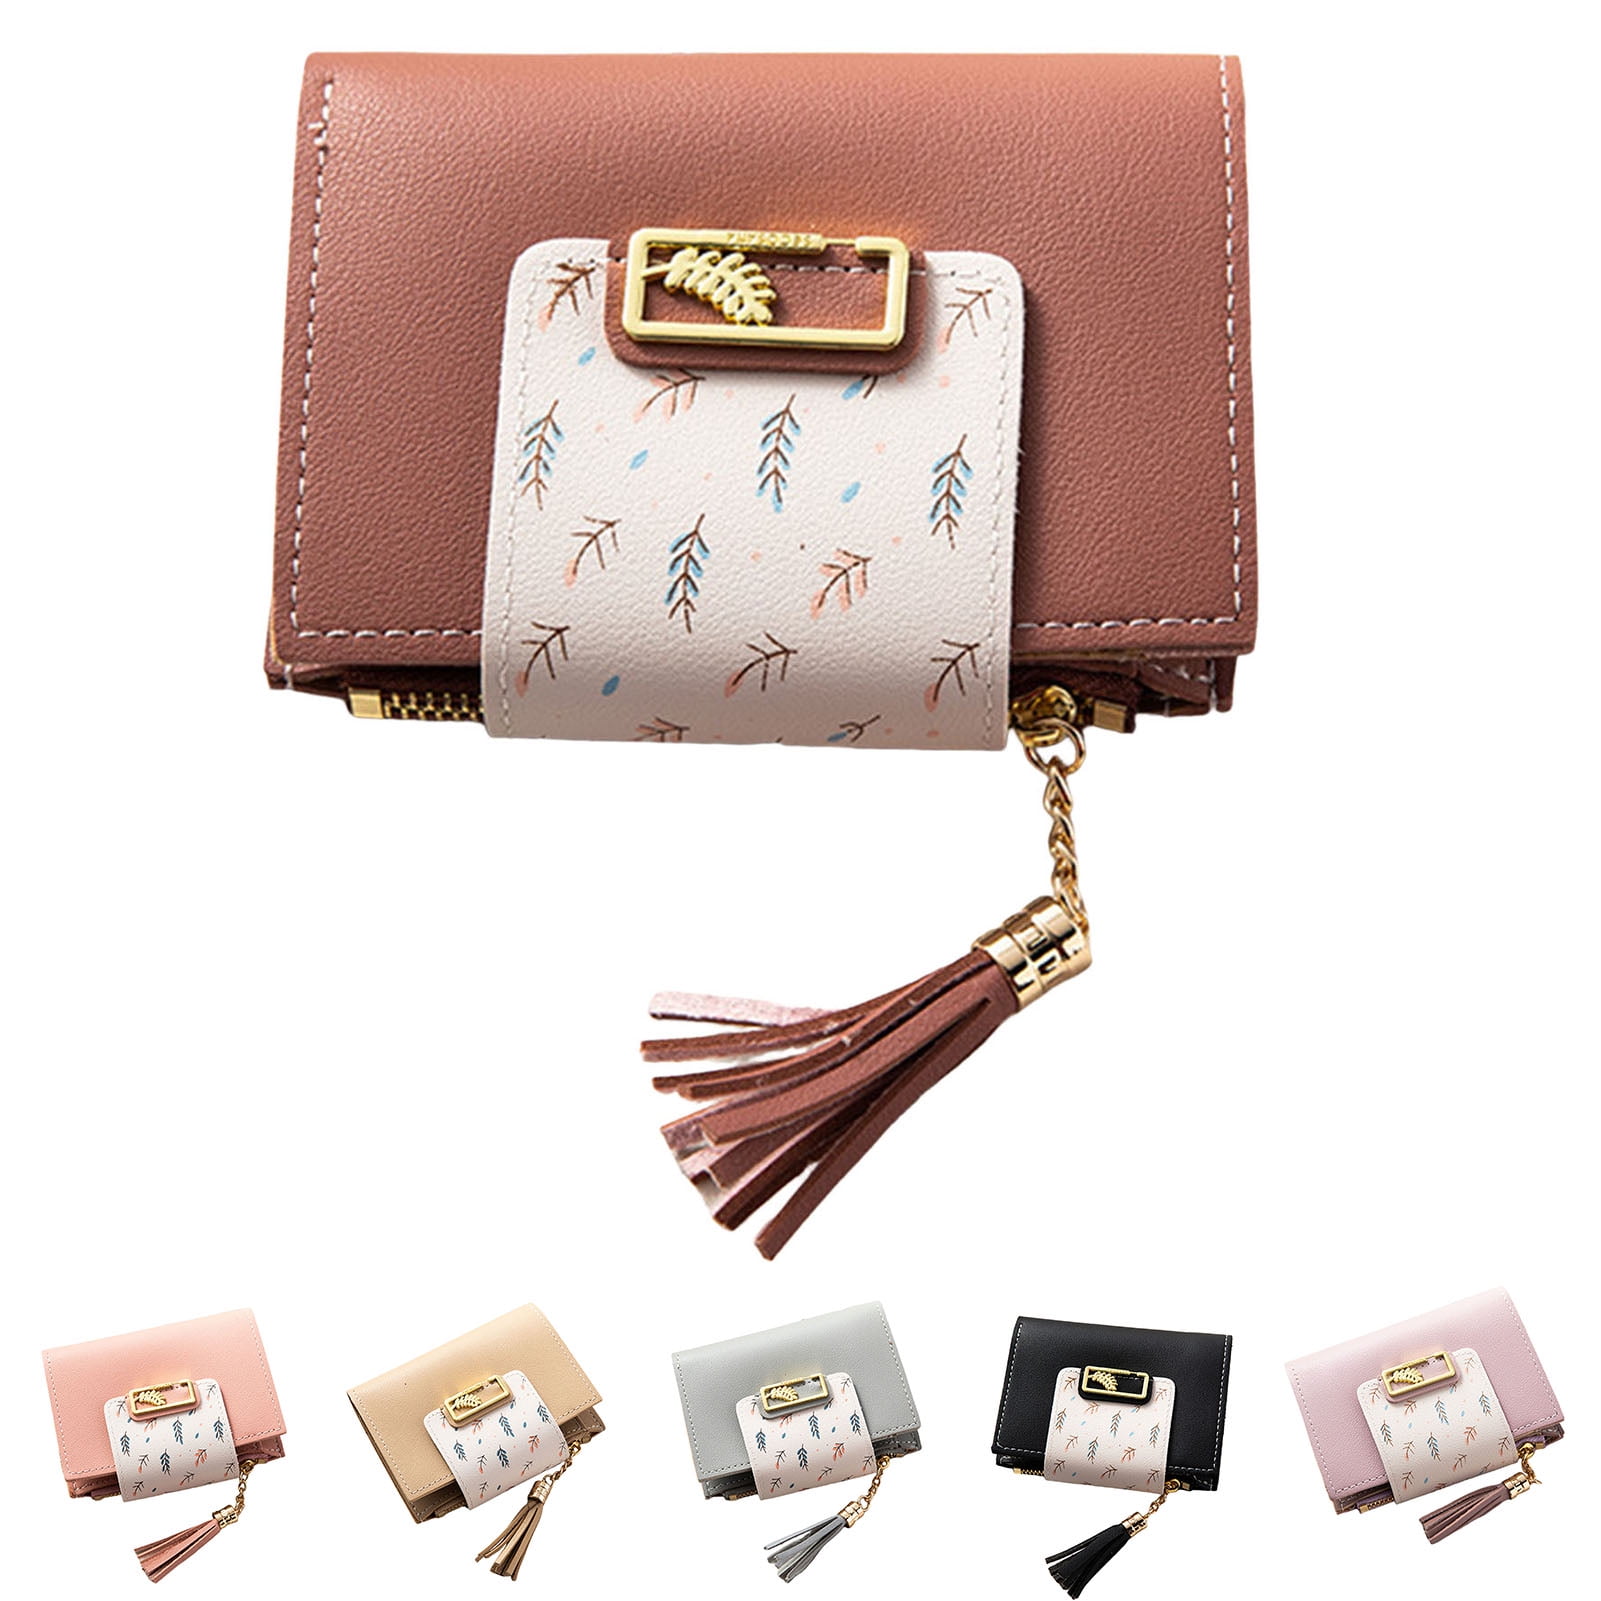 harmtty Fashion Women Solid Color Trifold Short Wallet Cash Card Holder  Coin Purse Bag,Light Gray